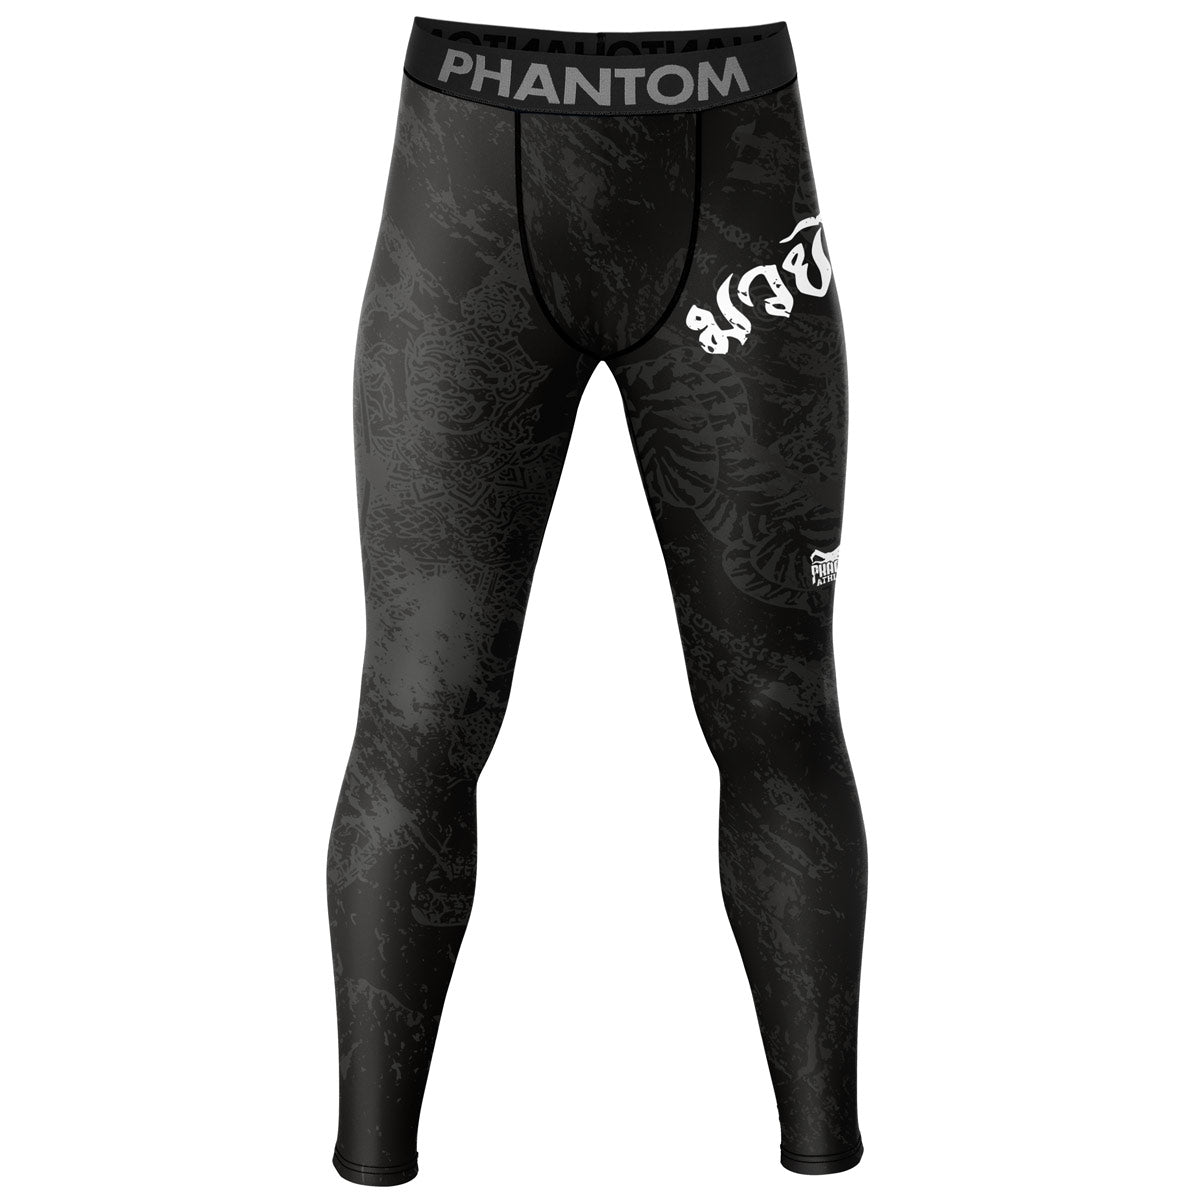 Phantom muay thai combat sports leggings / tights